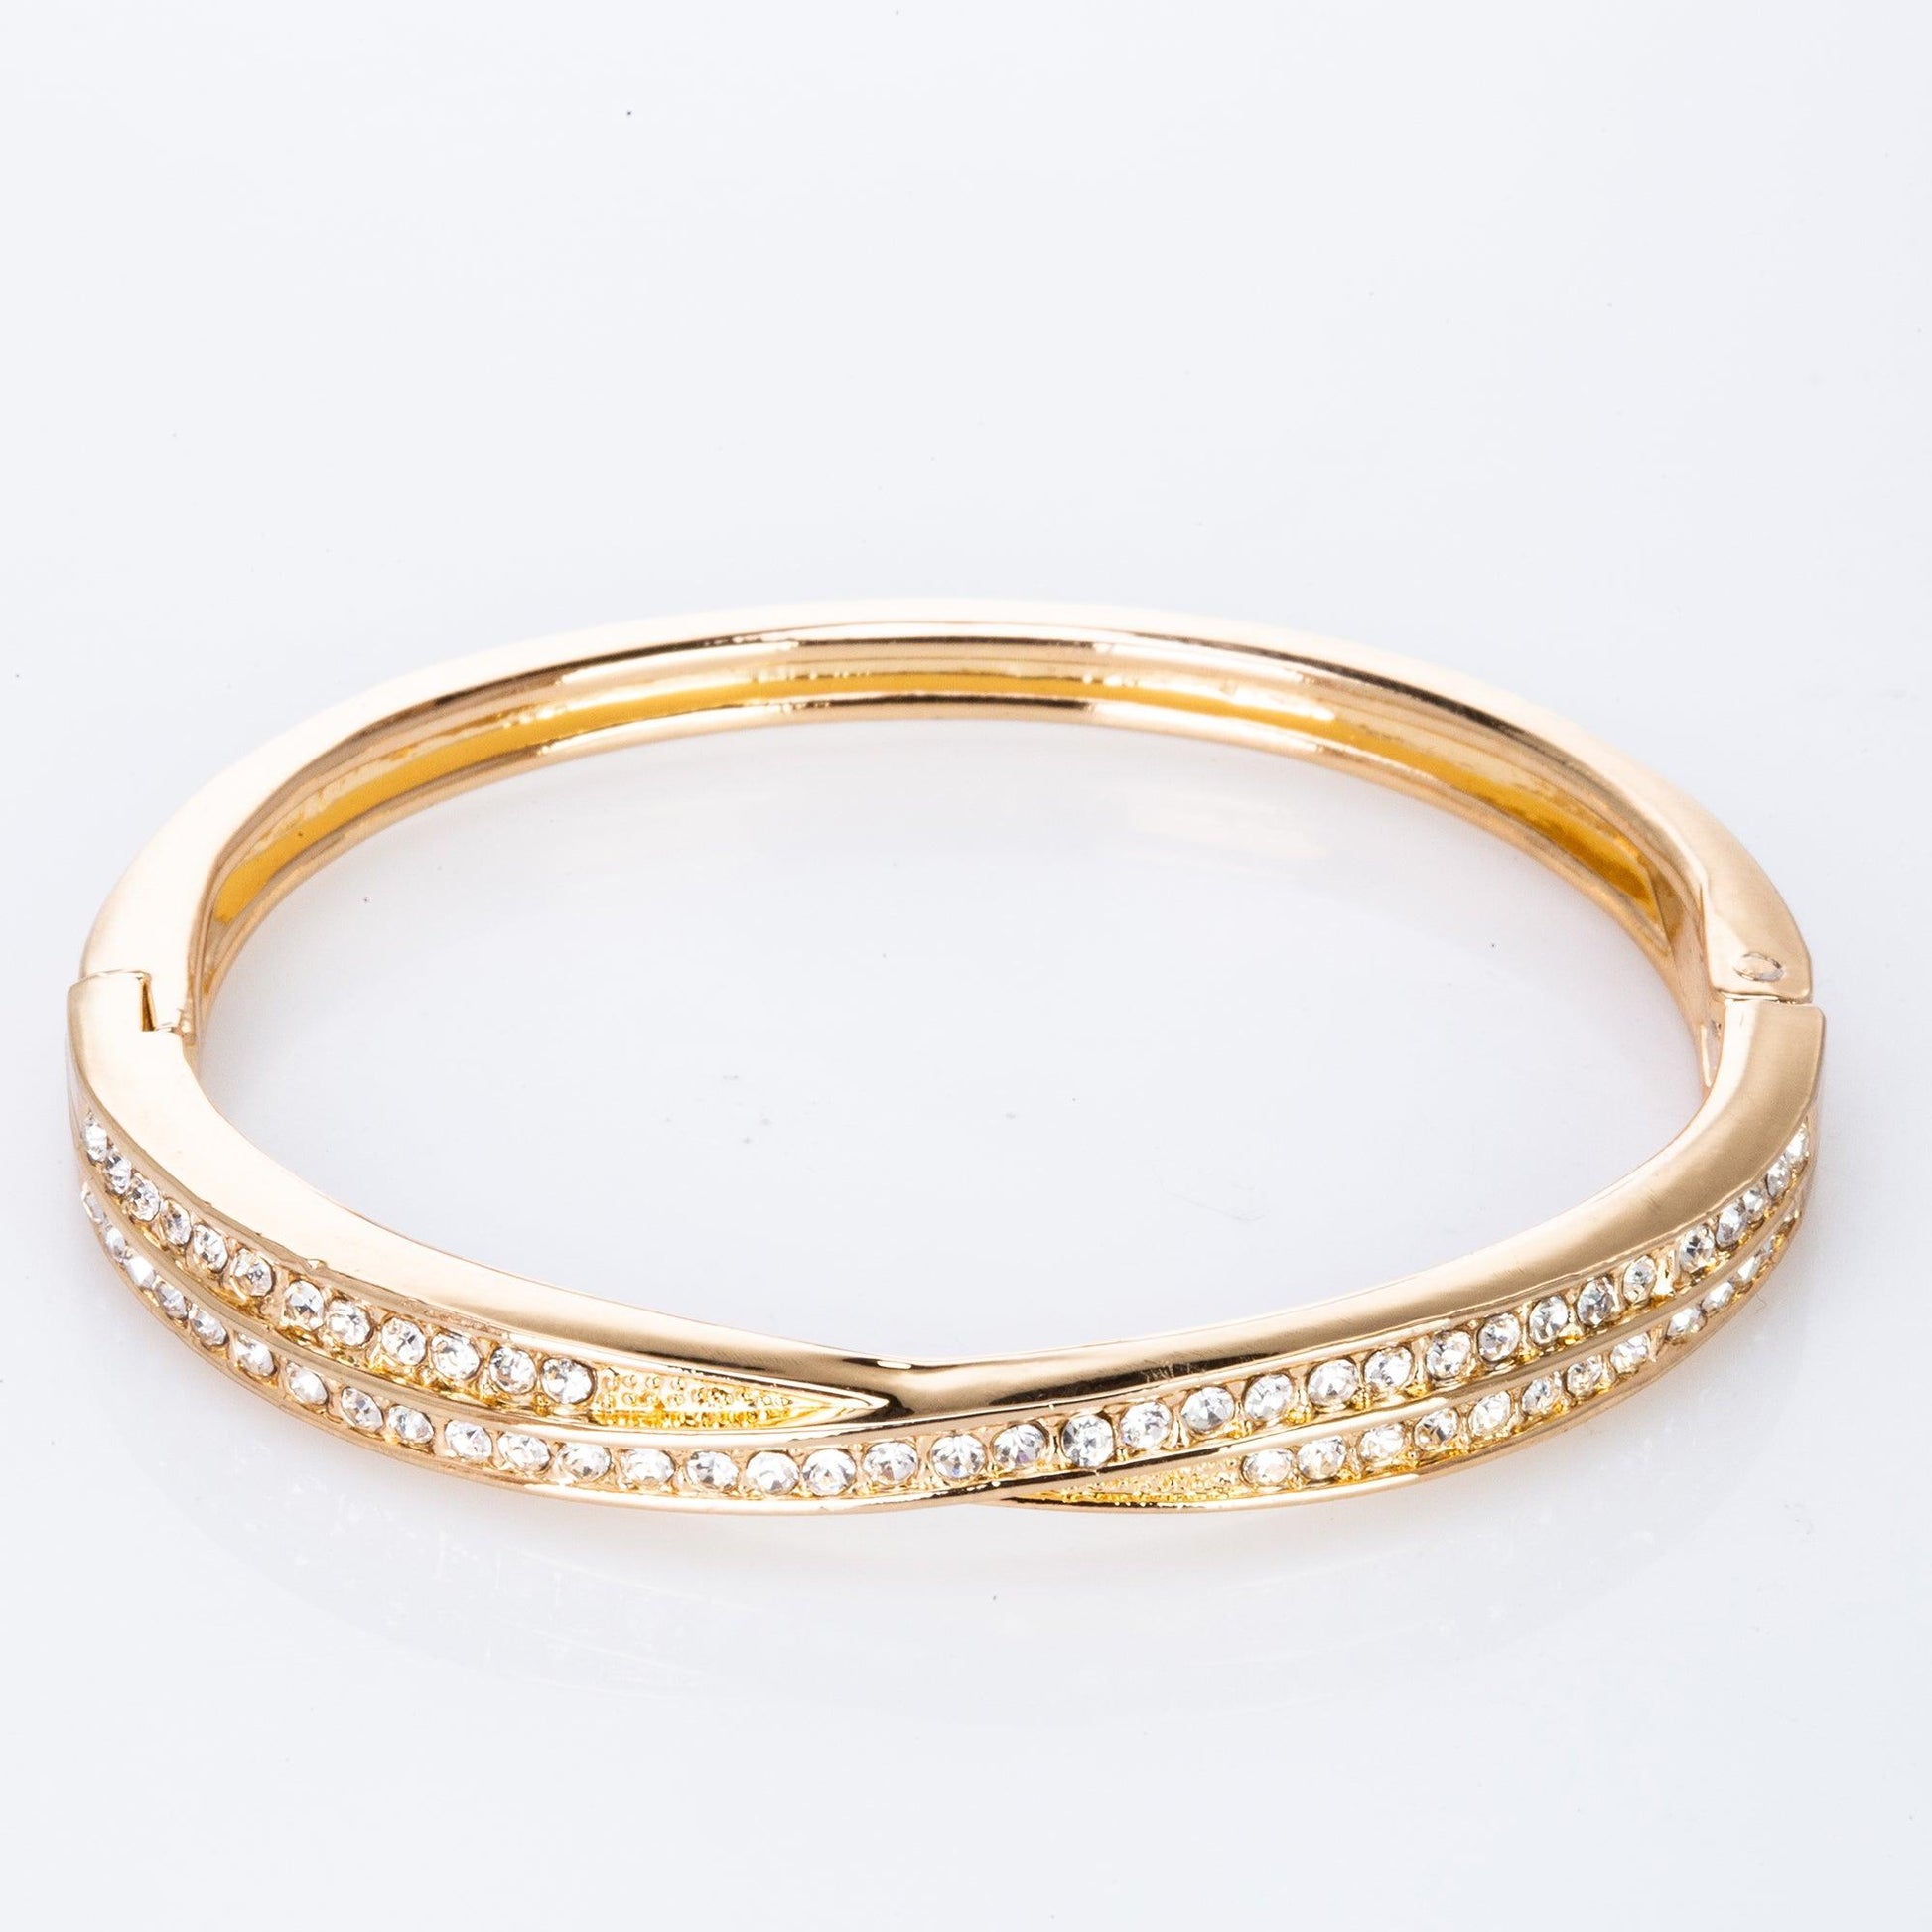 Excellanc gift set, ladies, watch, bracelet, bangle, gold-colored - Galeria de Bijuterii